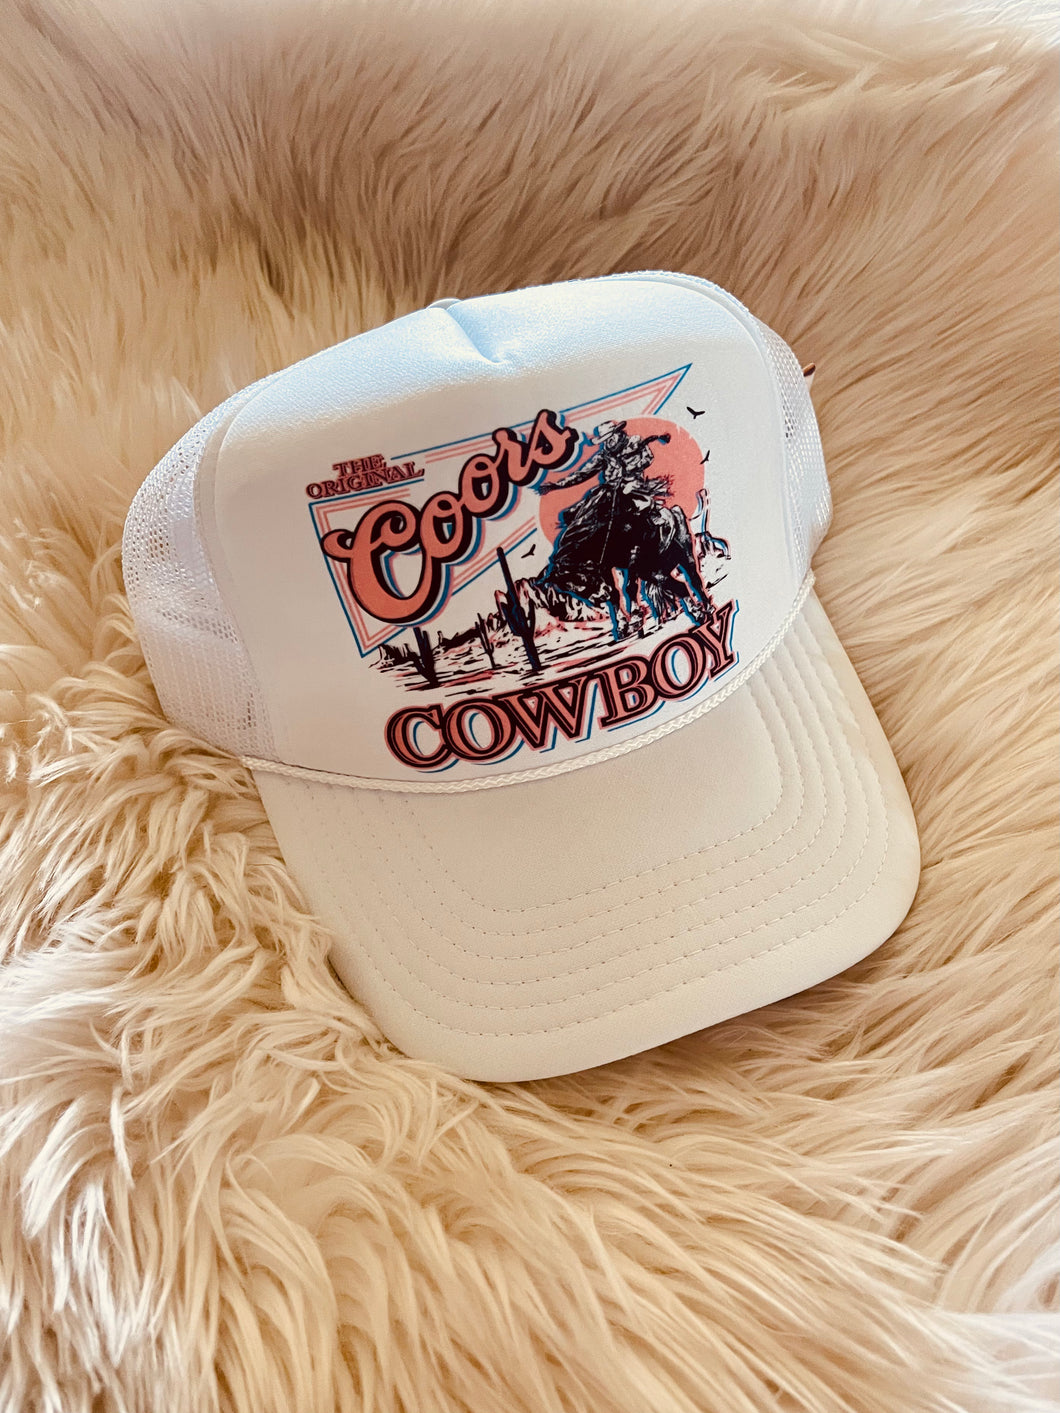 Coors Cowboy Trucker Hat